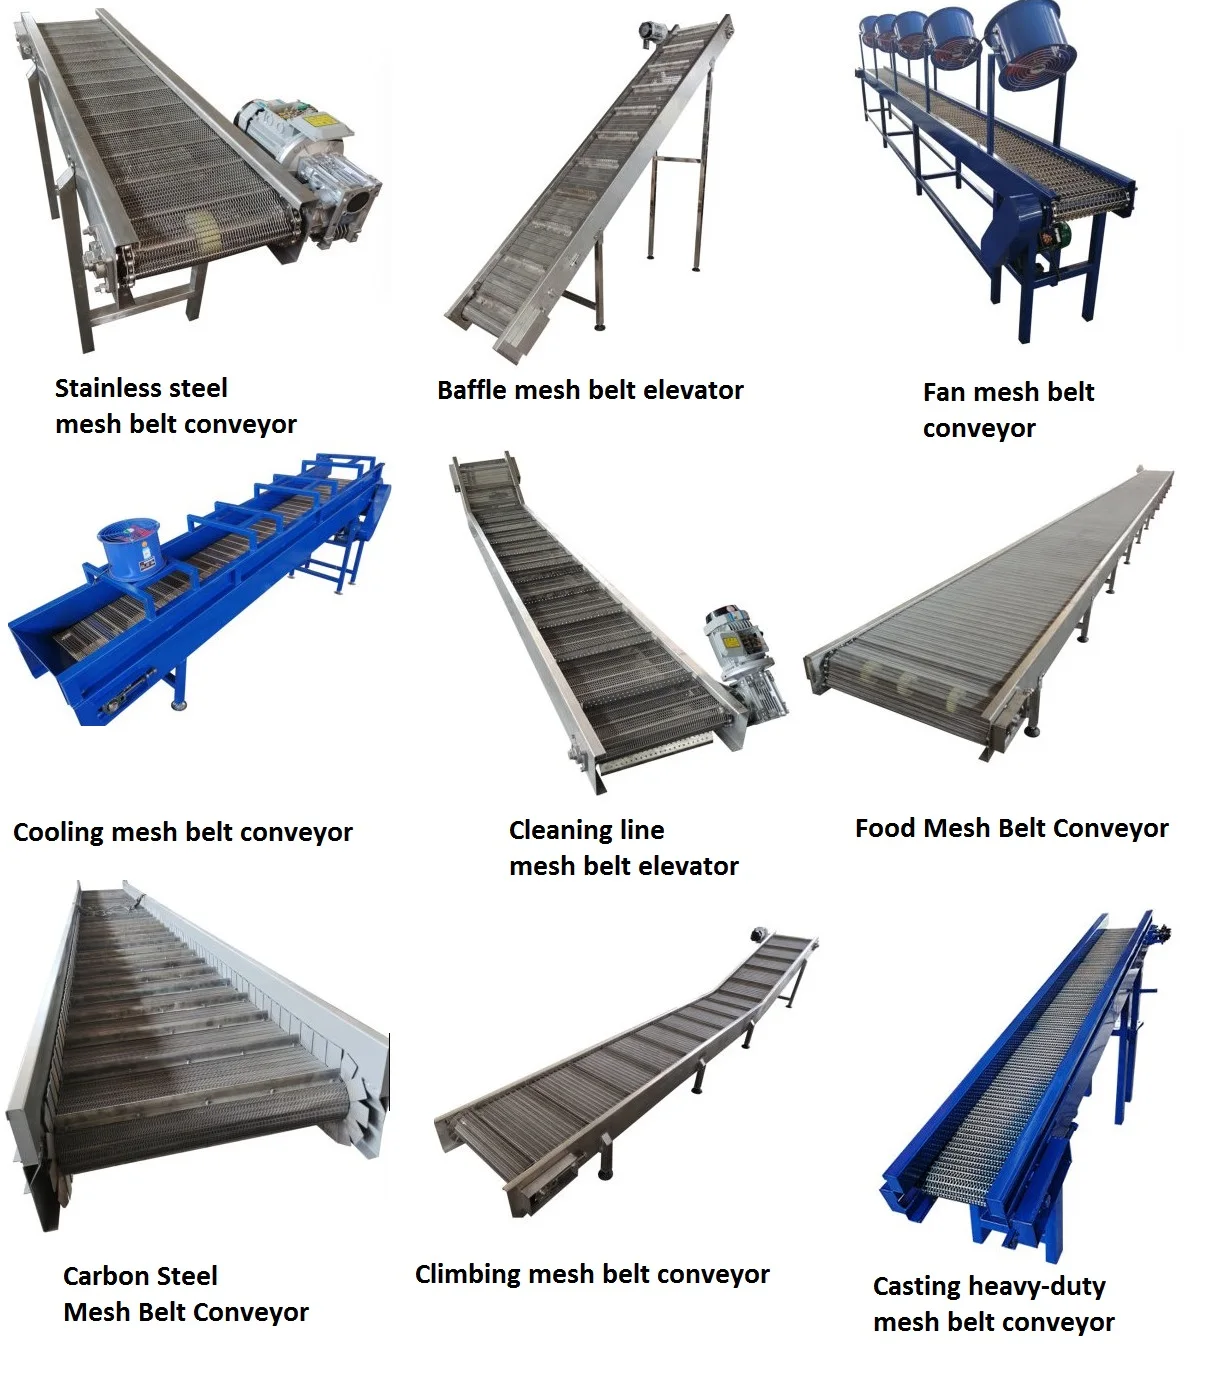 China Made Fan Mesh Belt Conveyor/ Cooling Mesh Belt Conveyor - Buy ...